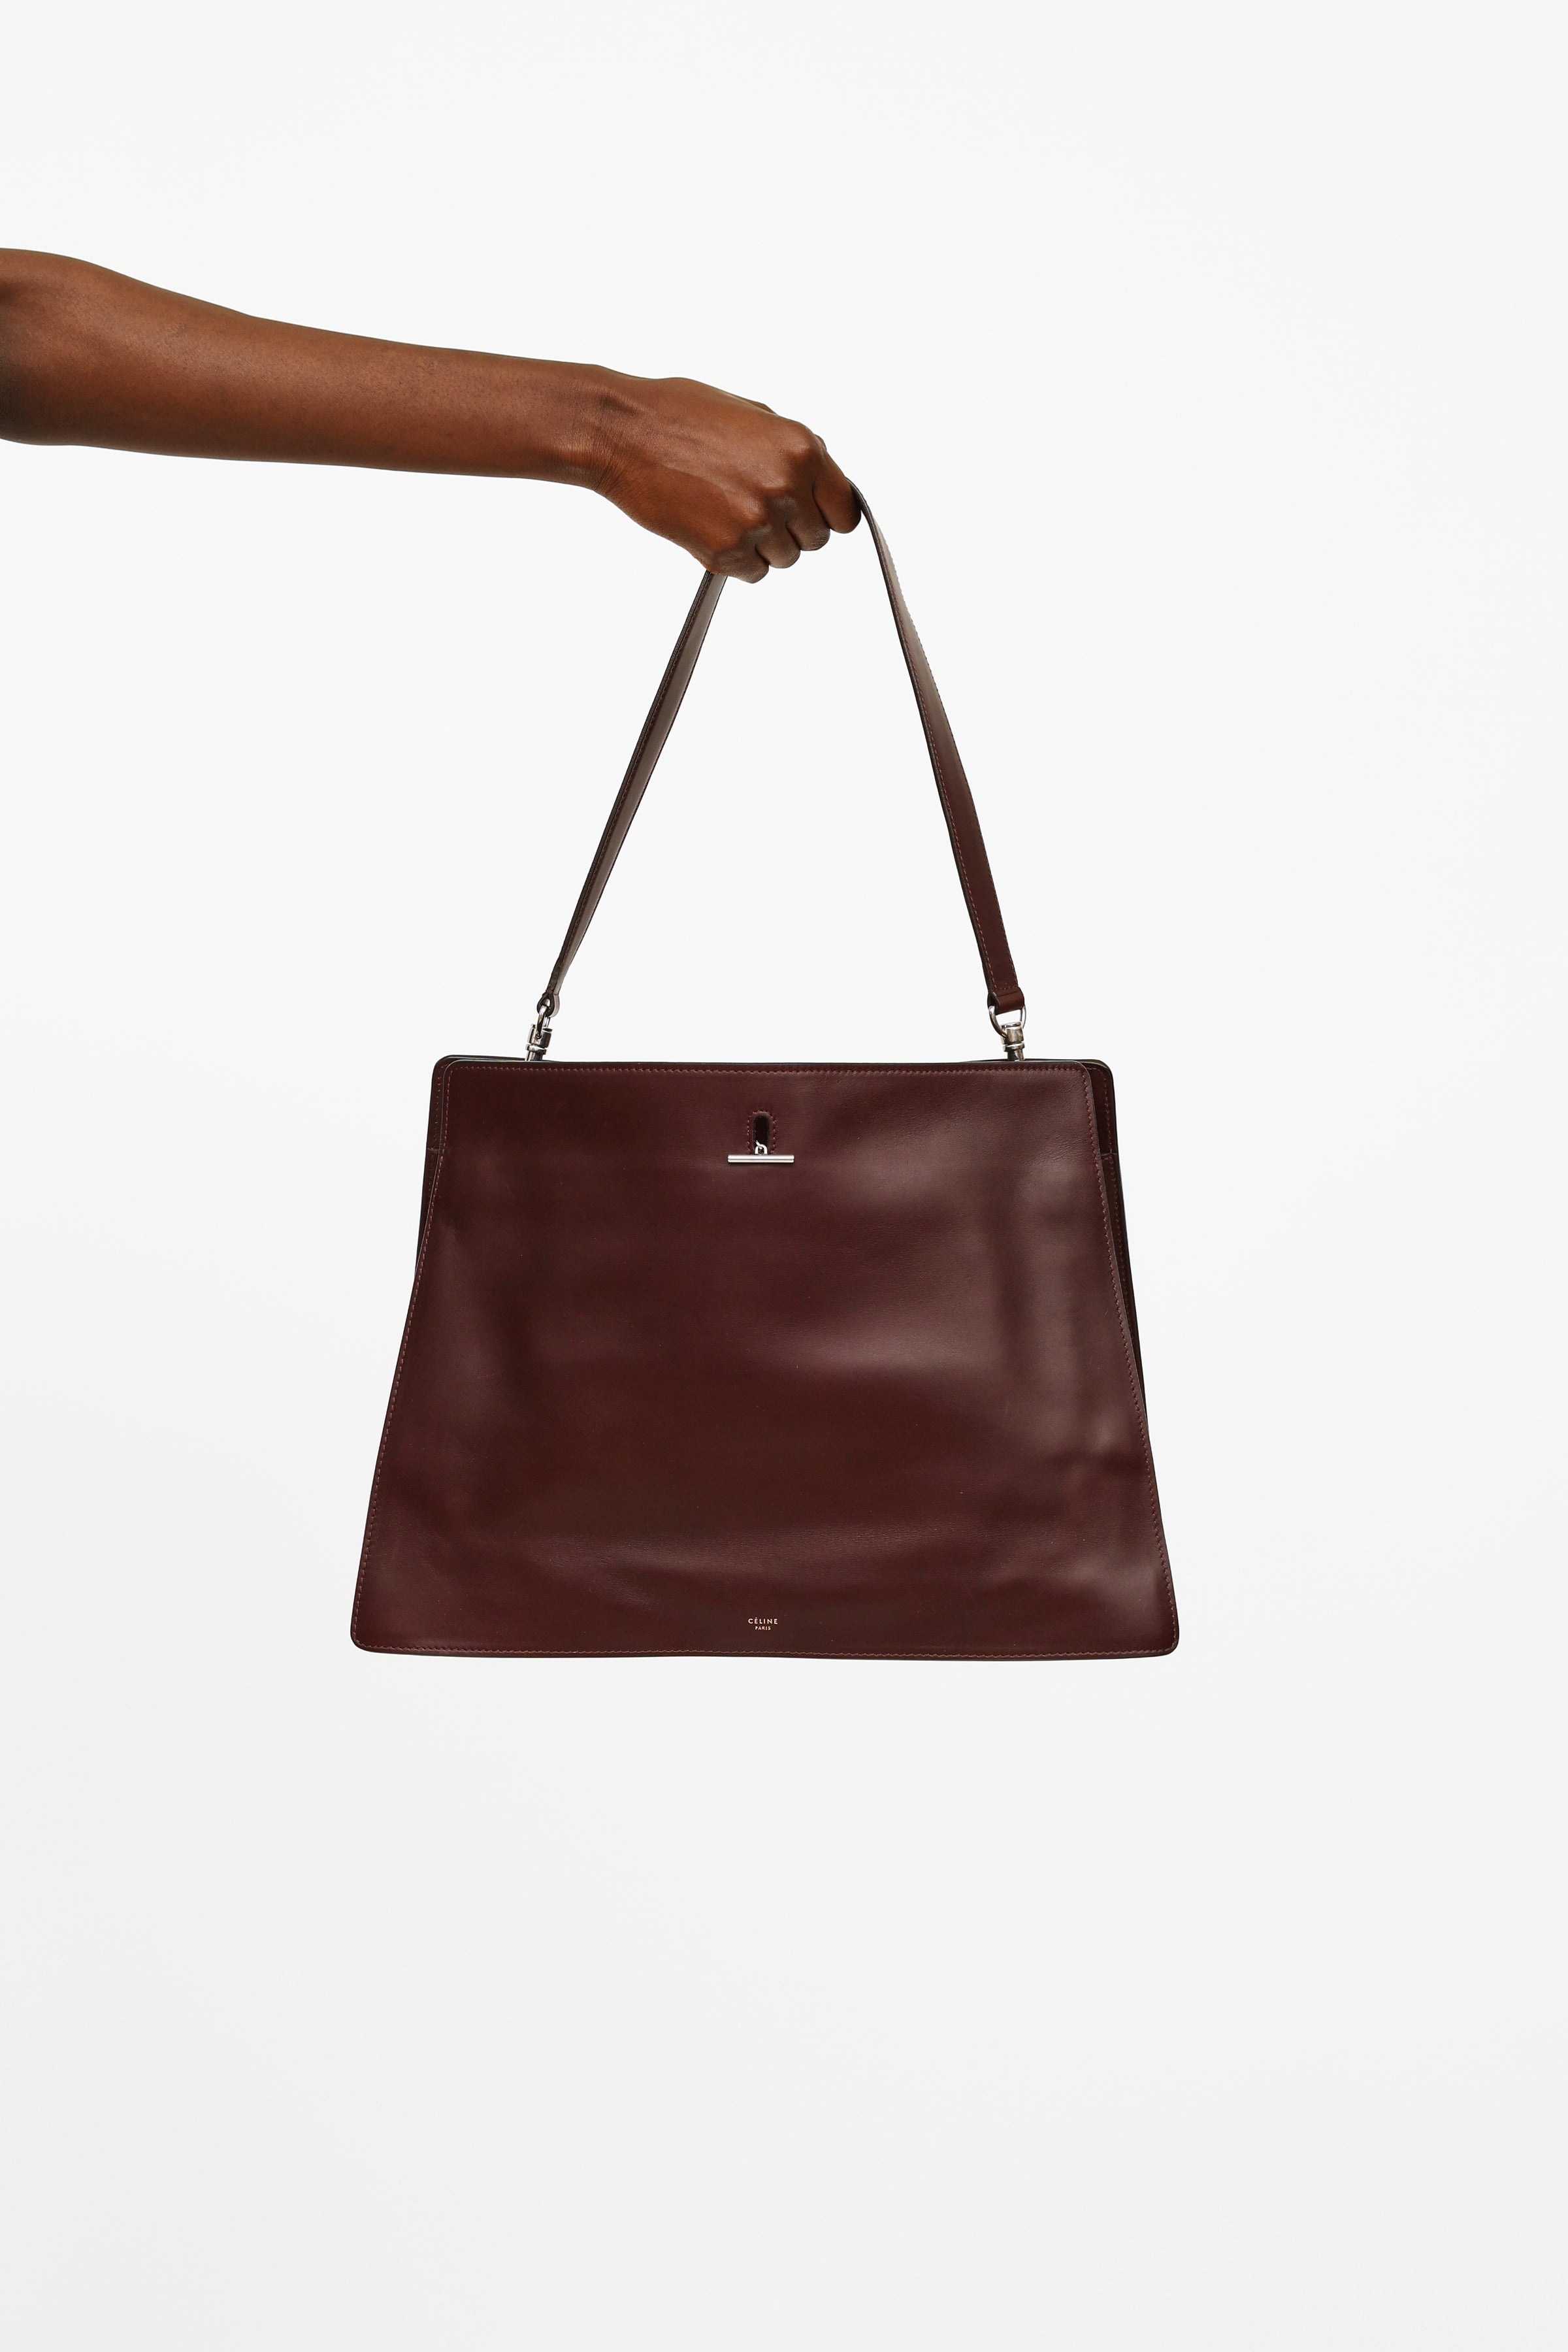 Ring leather handbag Celine Burgundy in Leather - 27682698